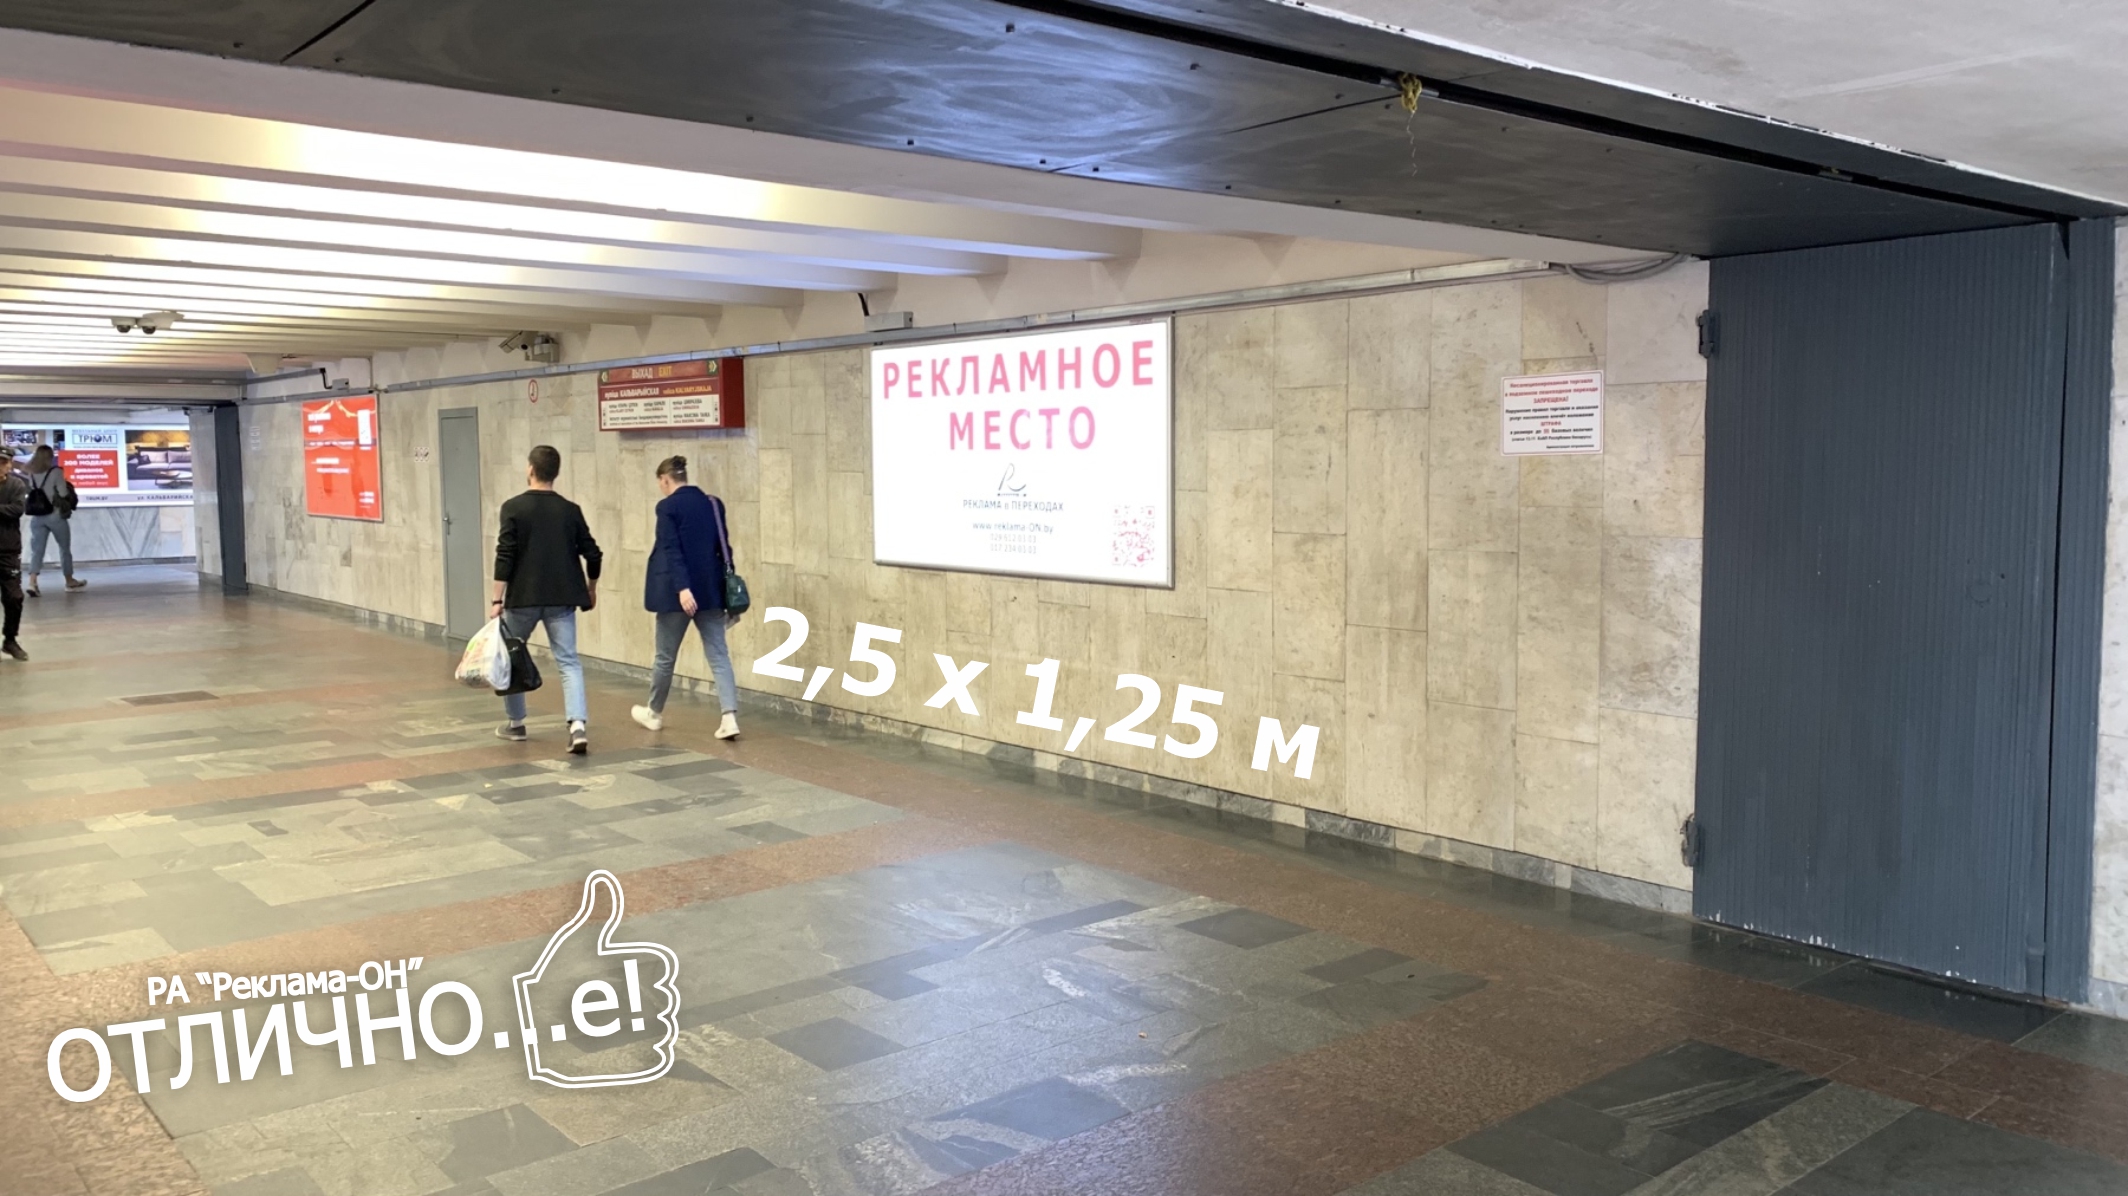 Ультраяркий световой лайтбокс на станции метро Фрунзенская (переход) reklama-on.by